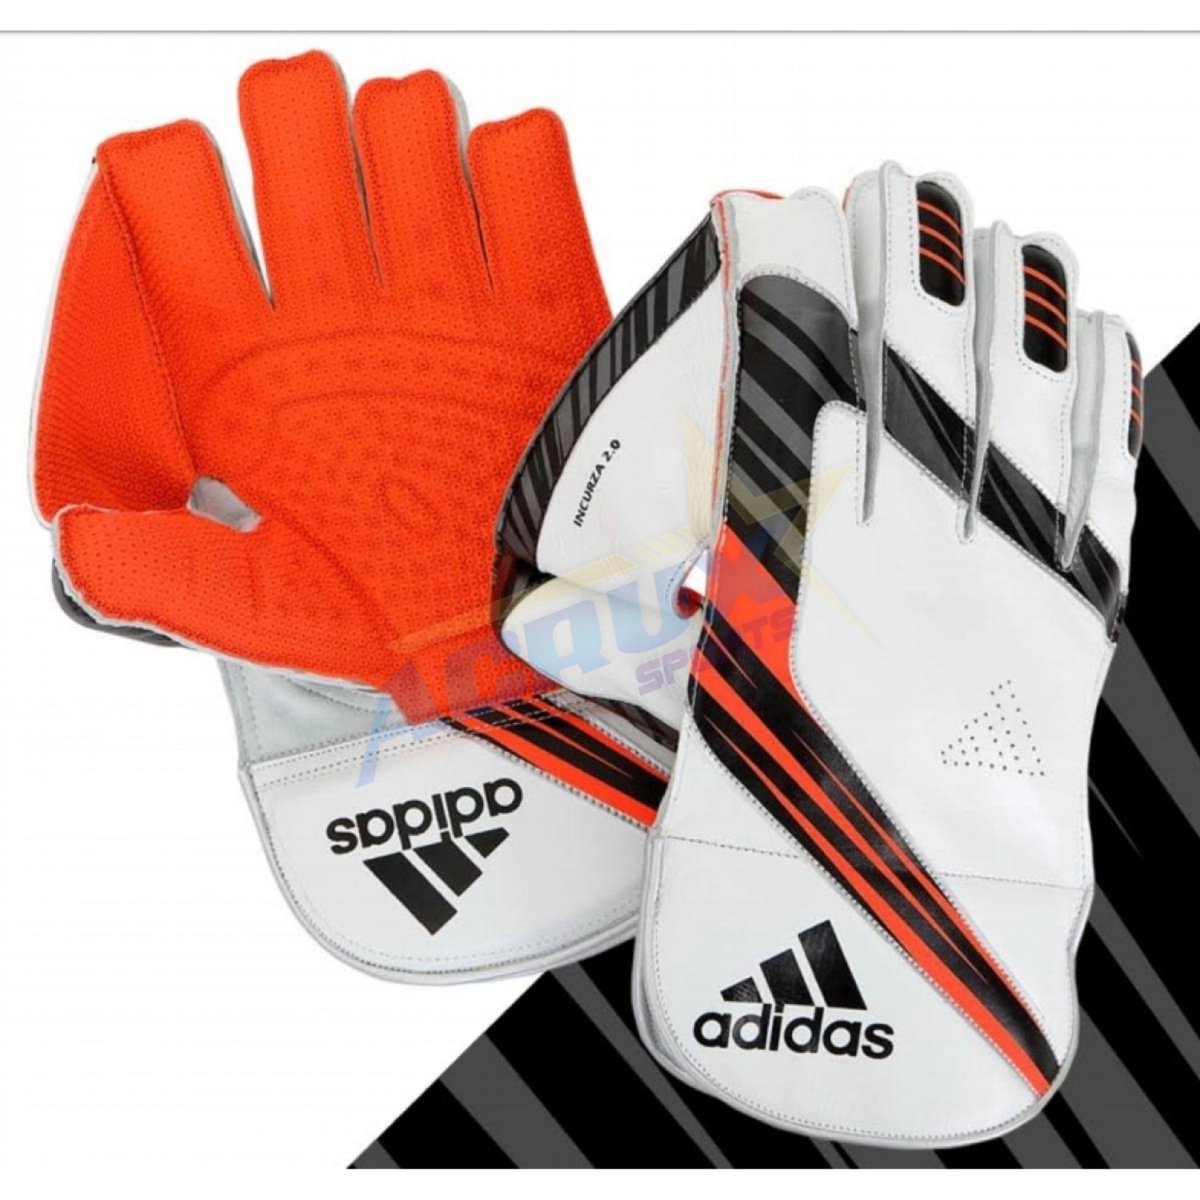 Adidas Incurza 2.0 Junior Cricket Wicket Keeping Gloves.